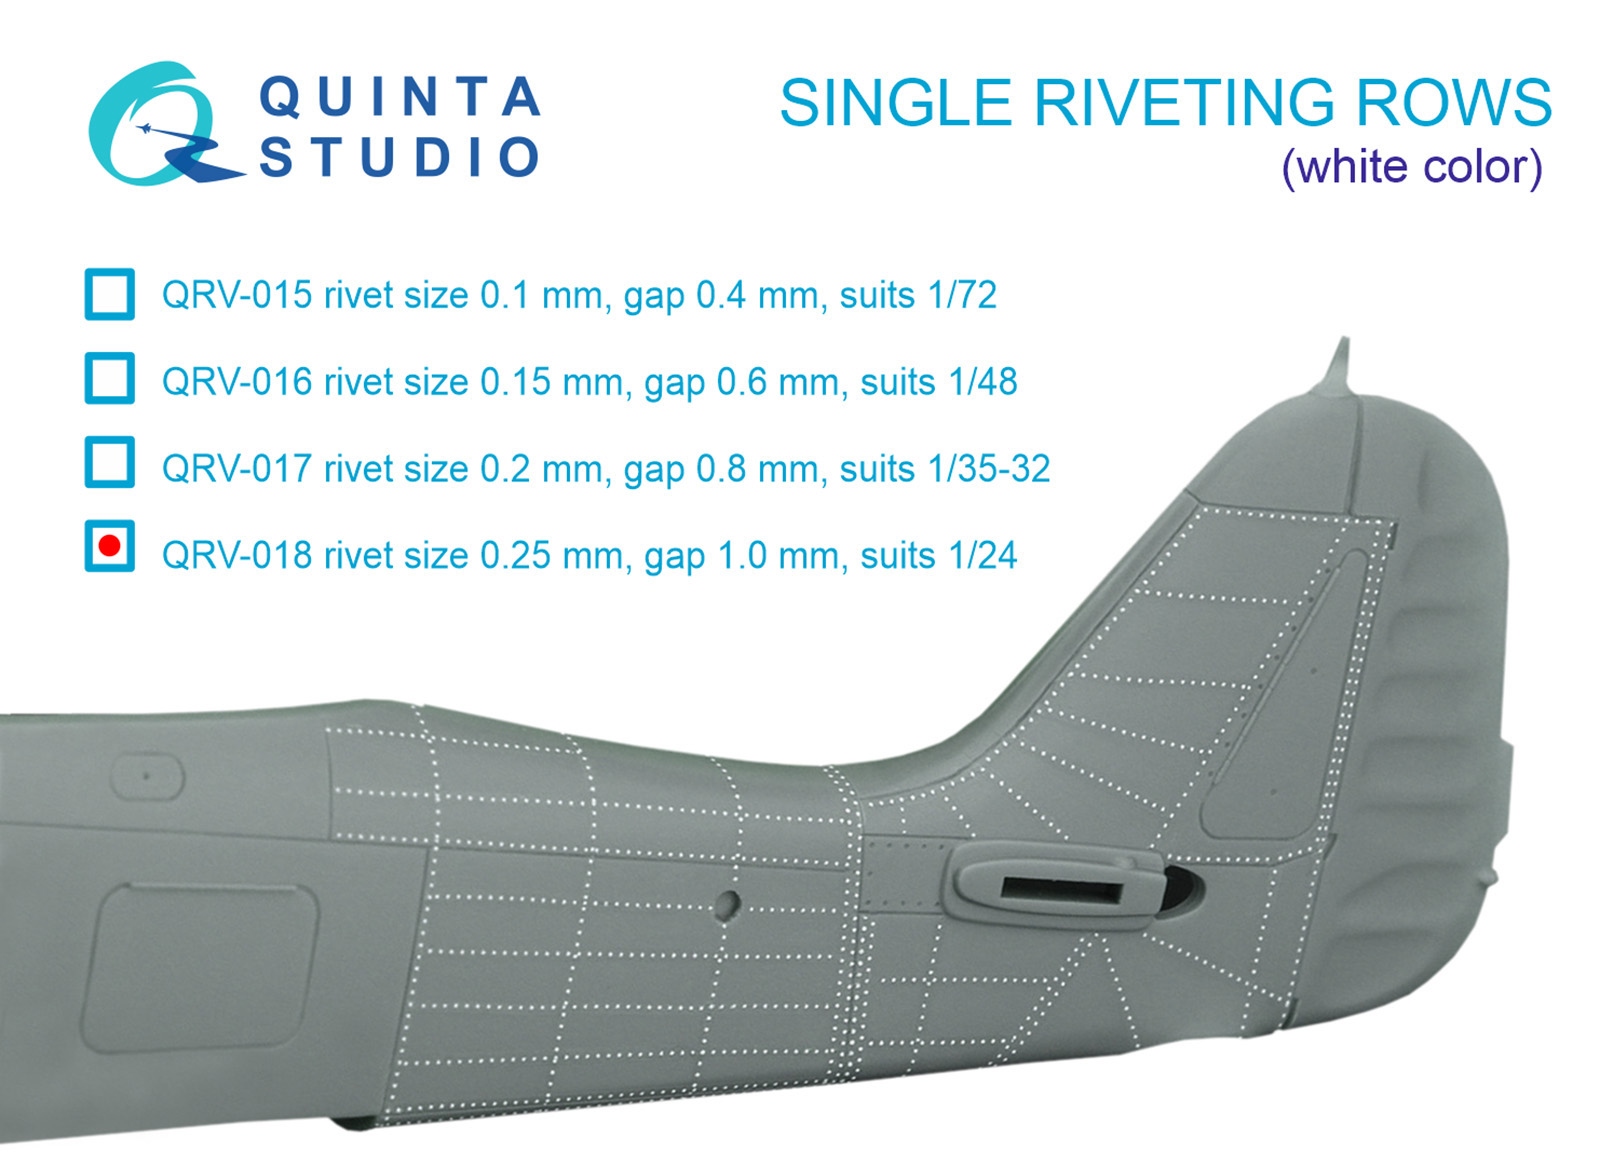 Single riveting rows (rivet size 0.25 mm, gap 1.0 mm, suits 1/24 scale), White color, total length 5,8 m/19 ft